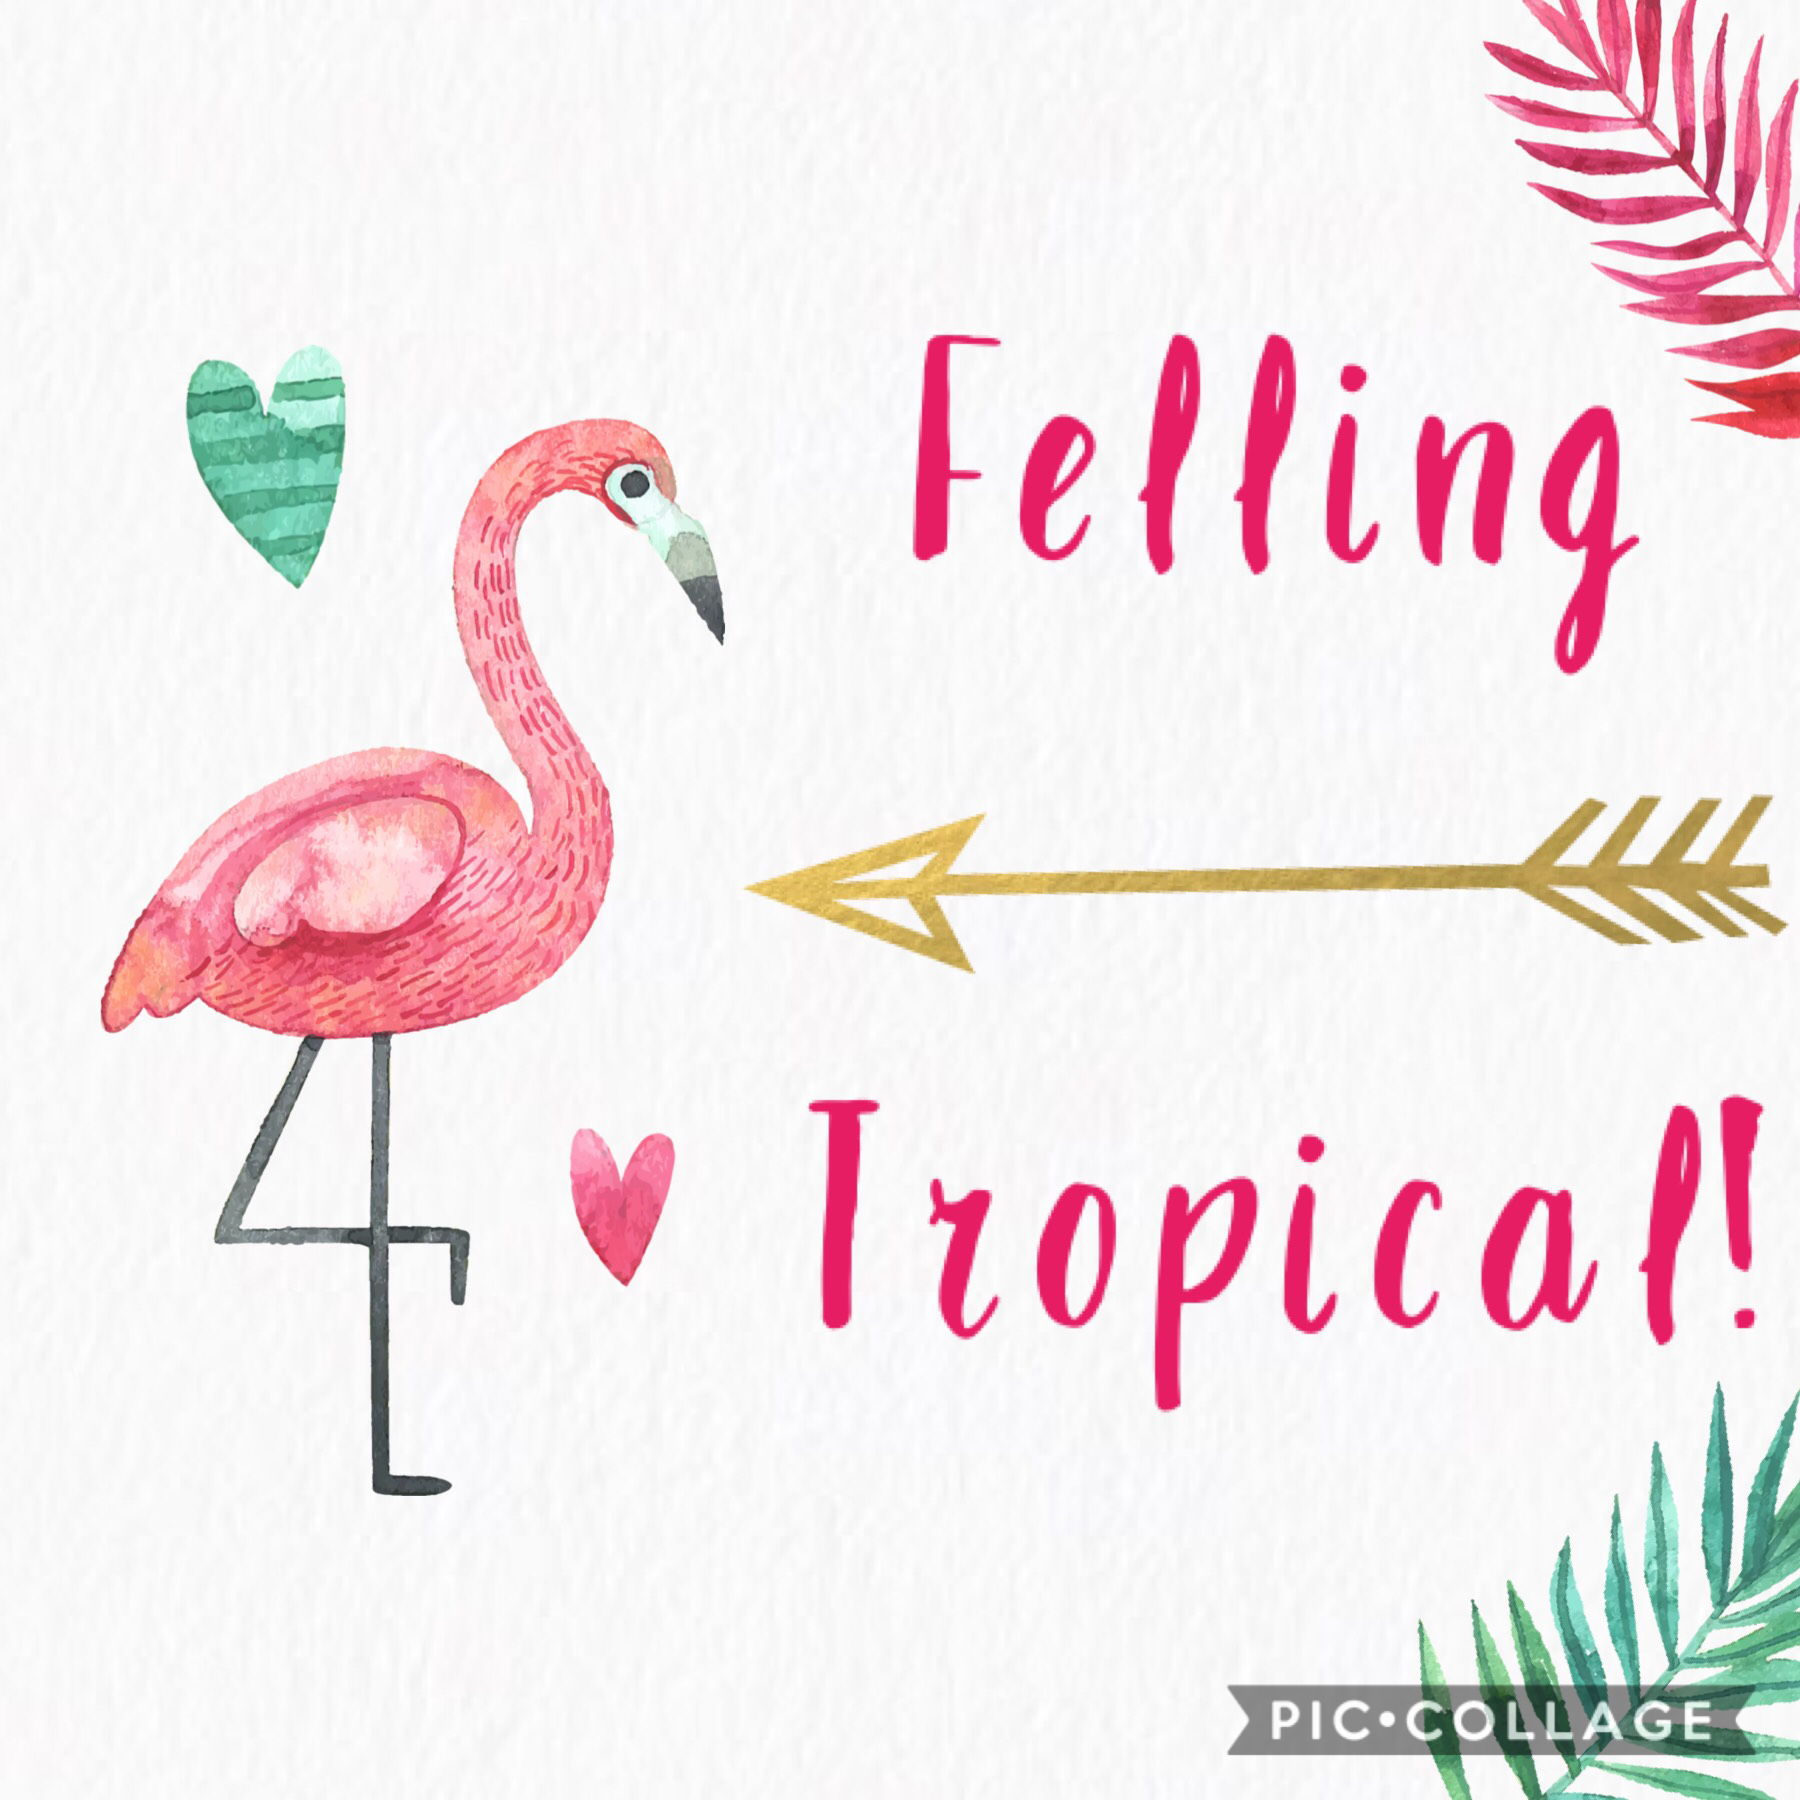 Felling tropical!